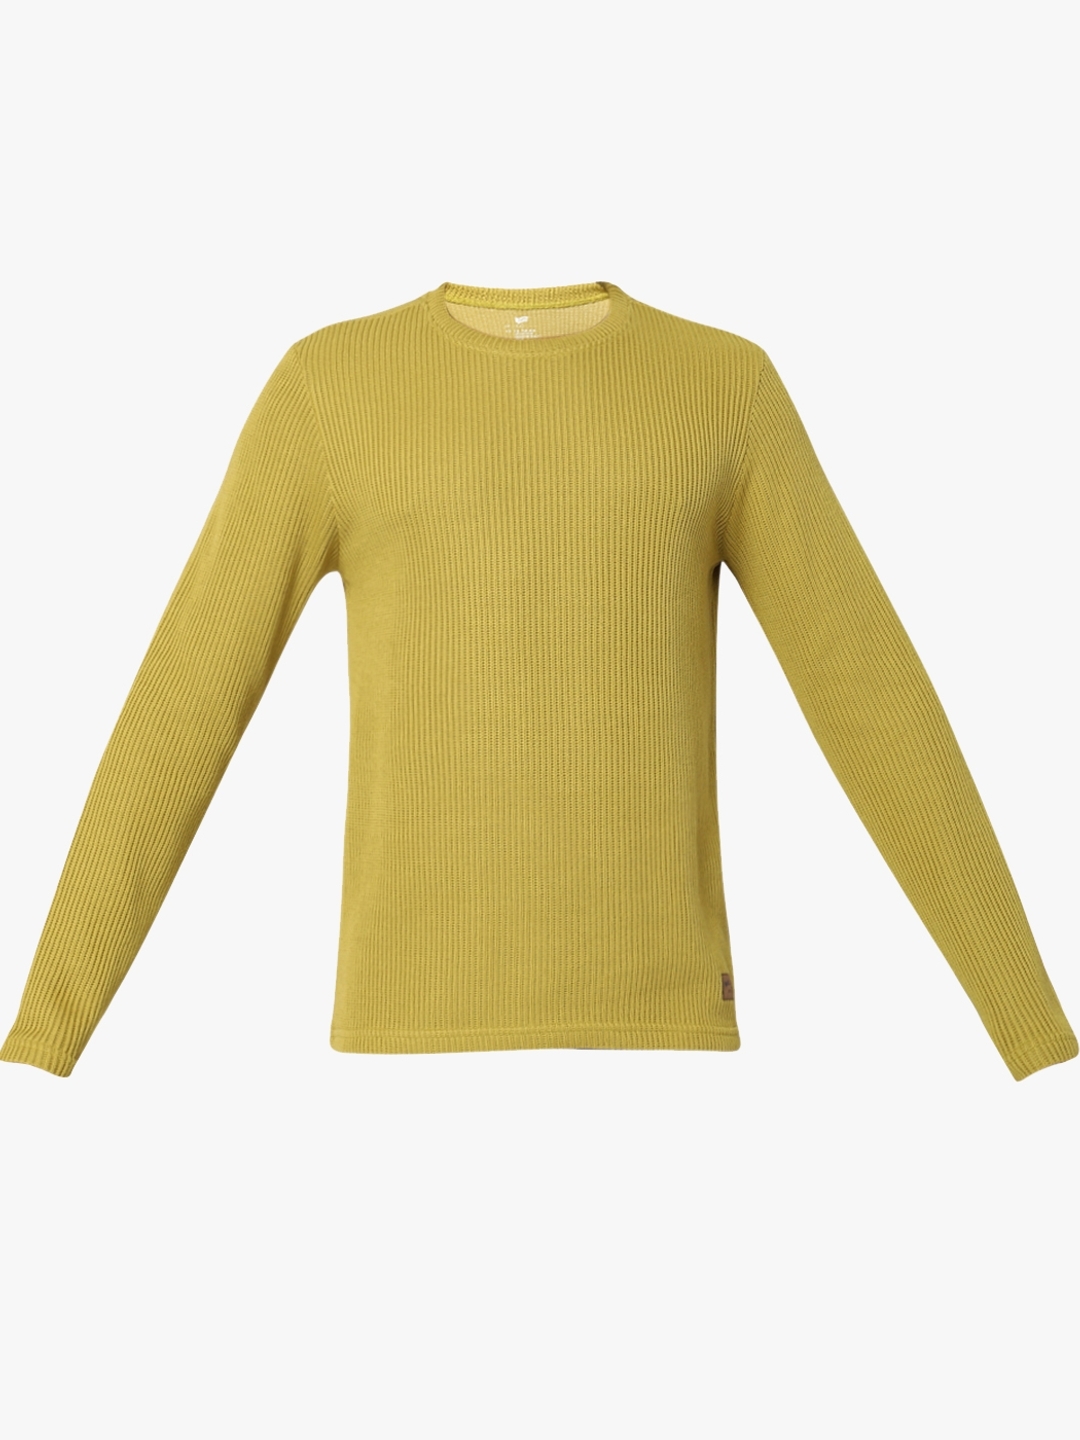 Regular Fit Full Sleeve Rib Neck Colourblock Knitted Sweater